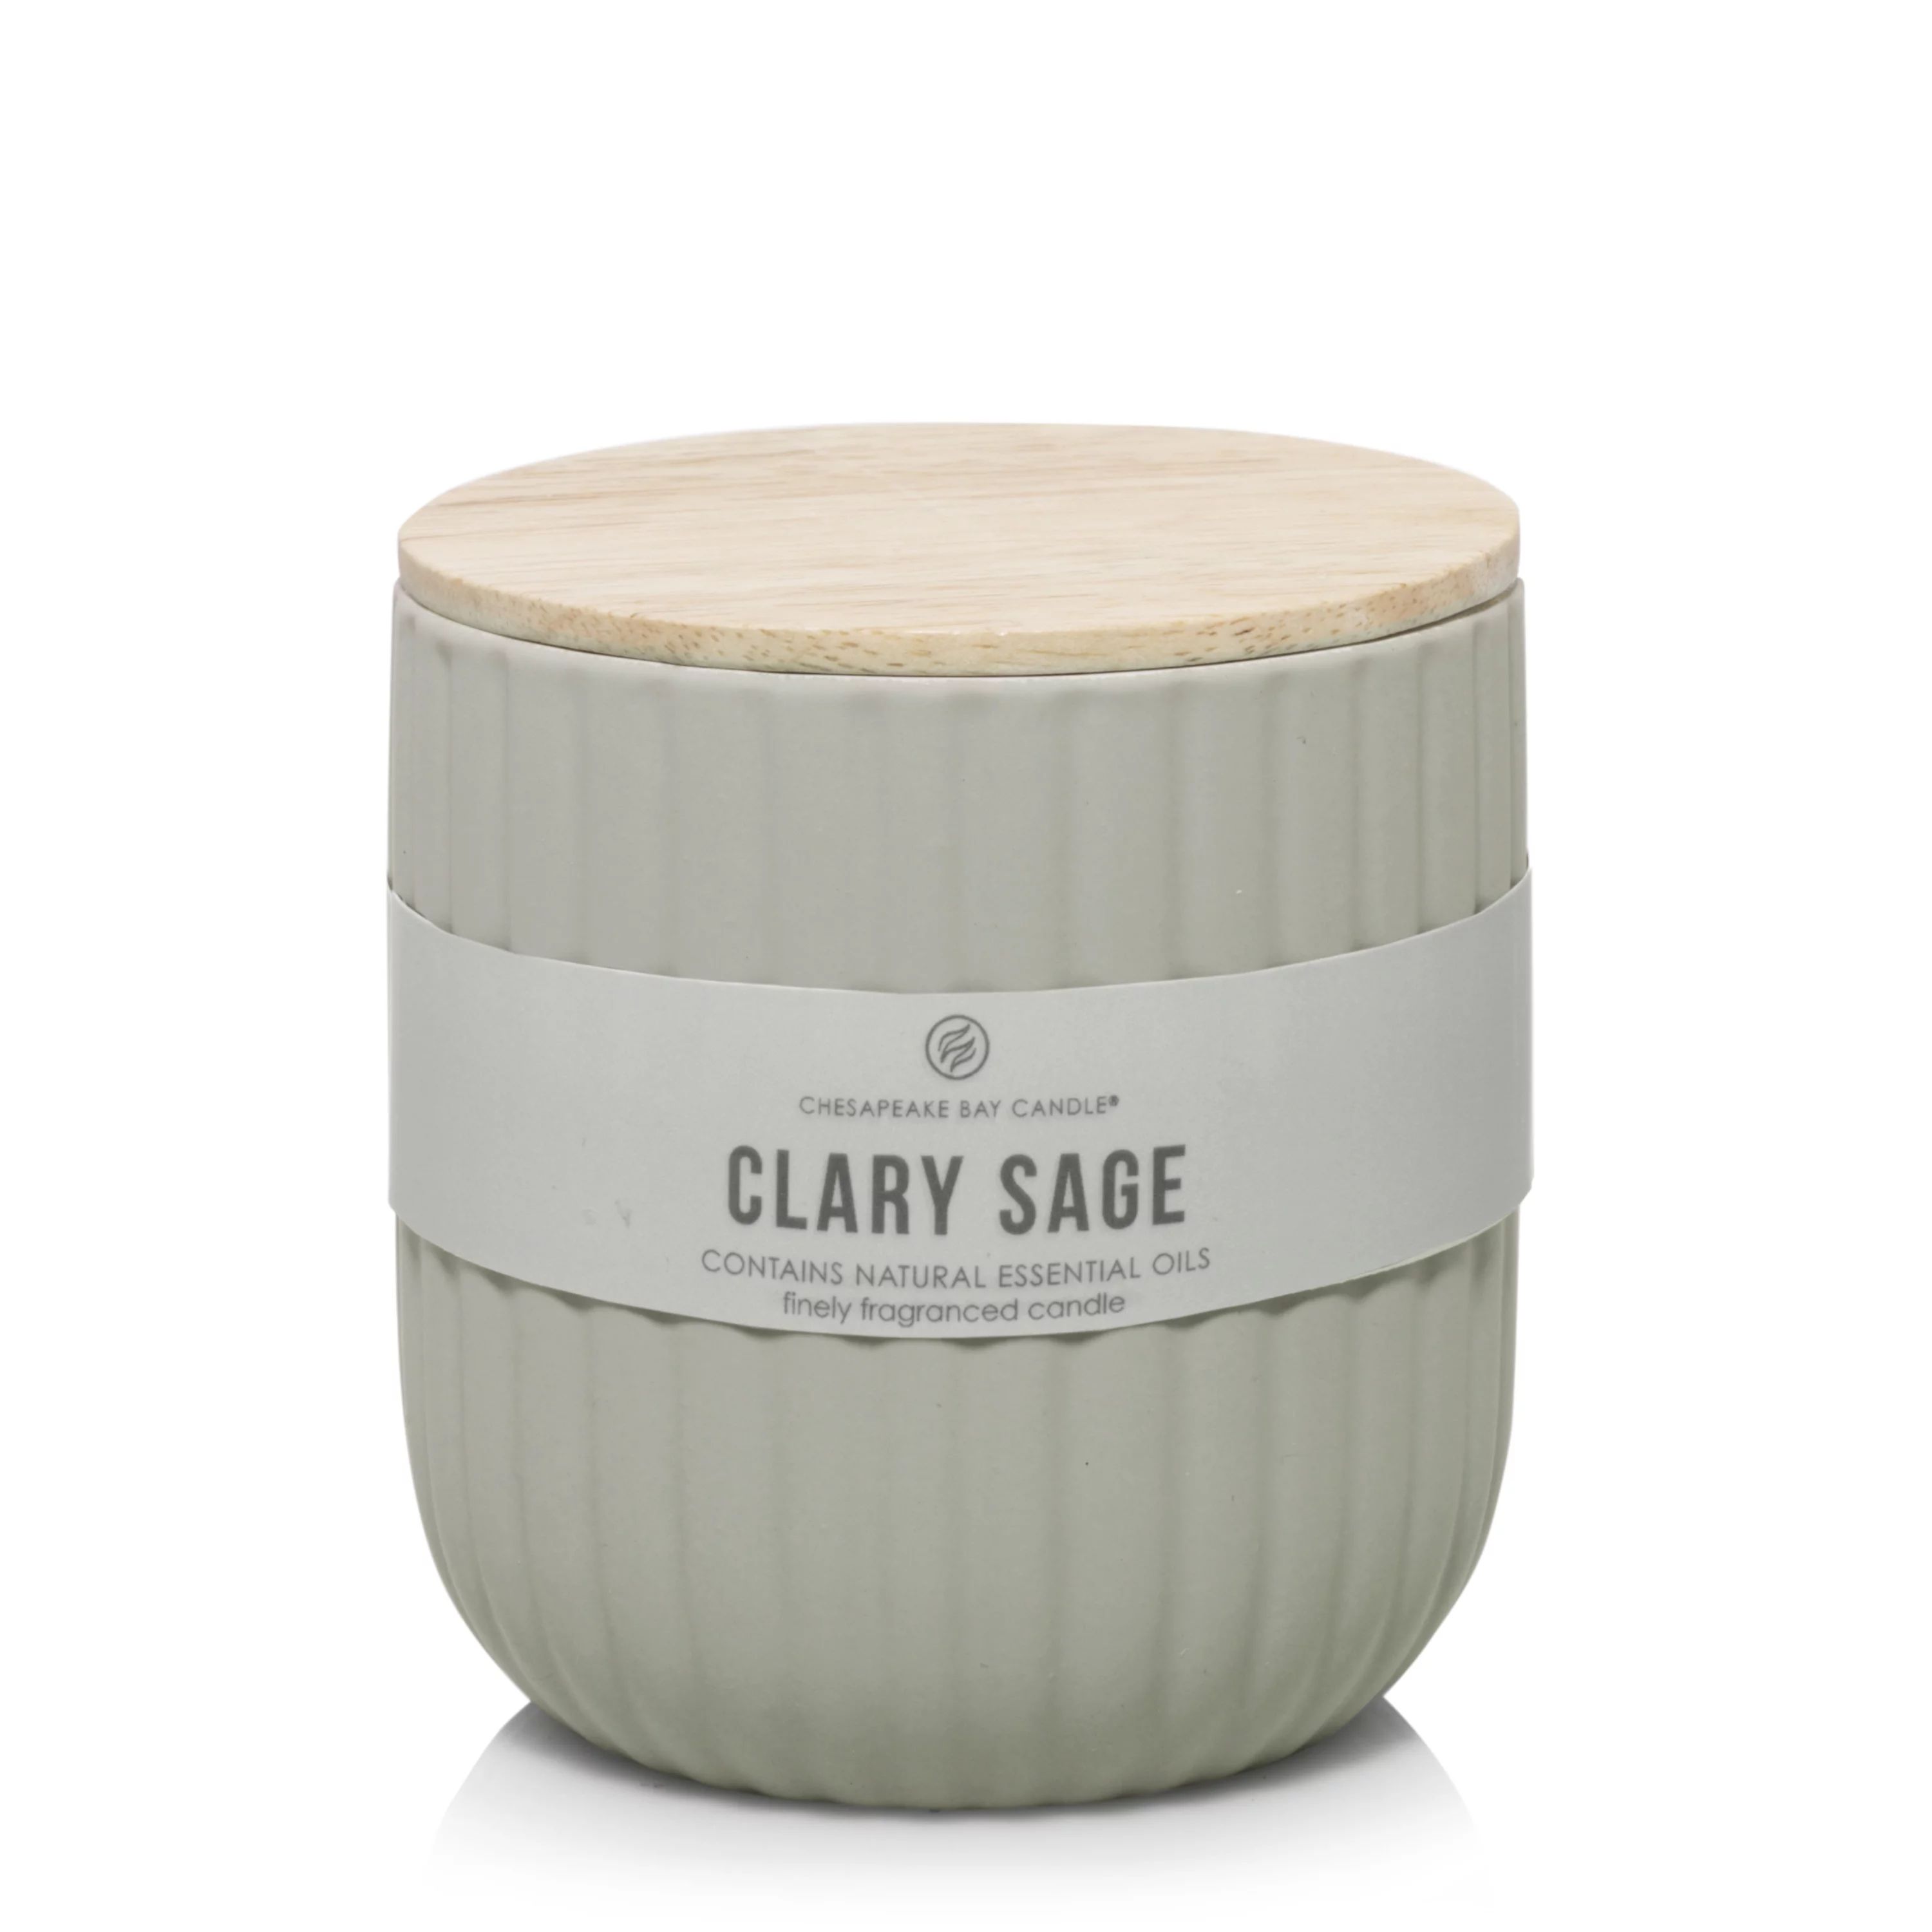 Chesapeake Bay Candle® Clary Sage Medium Jar Candle | Walmart (US)